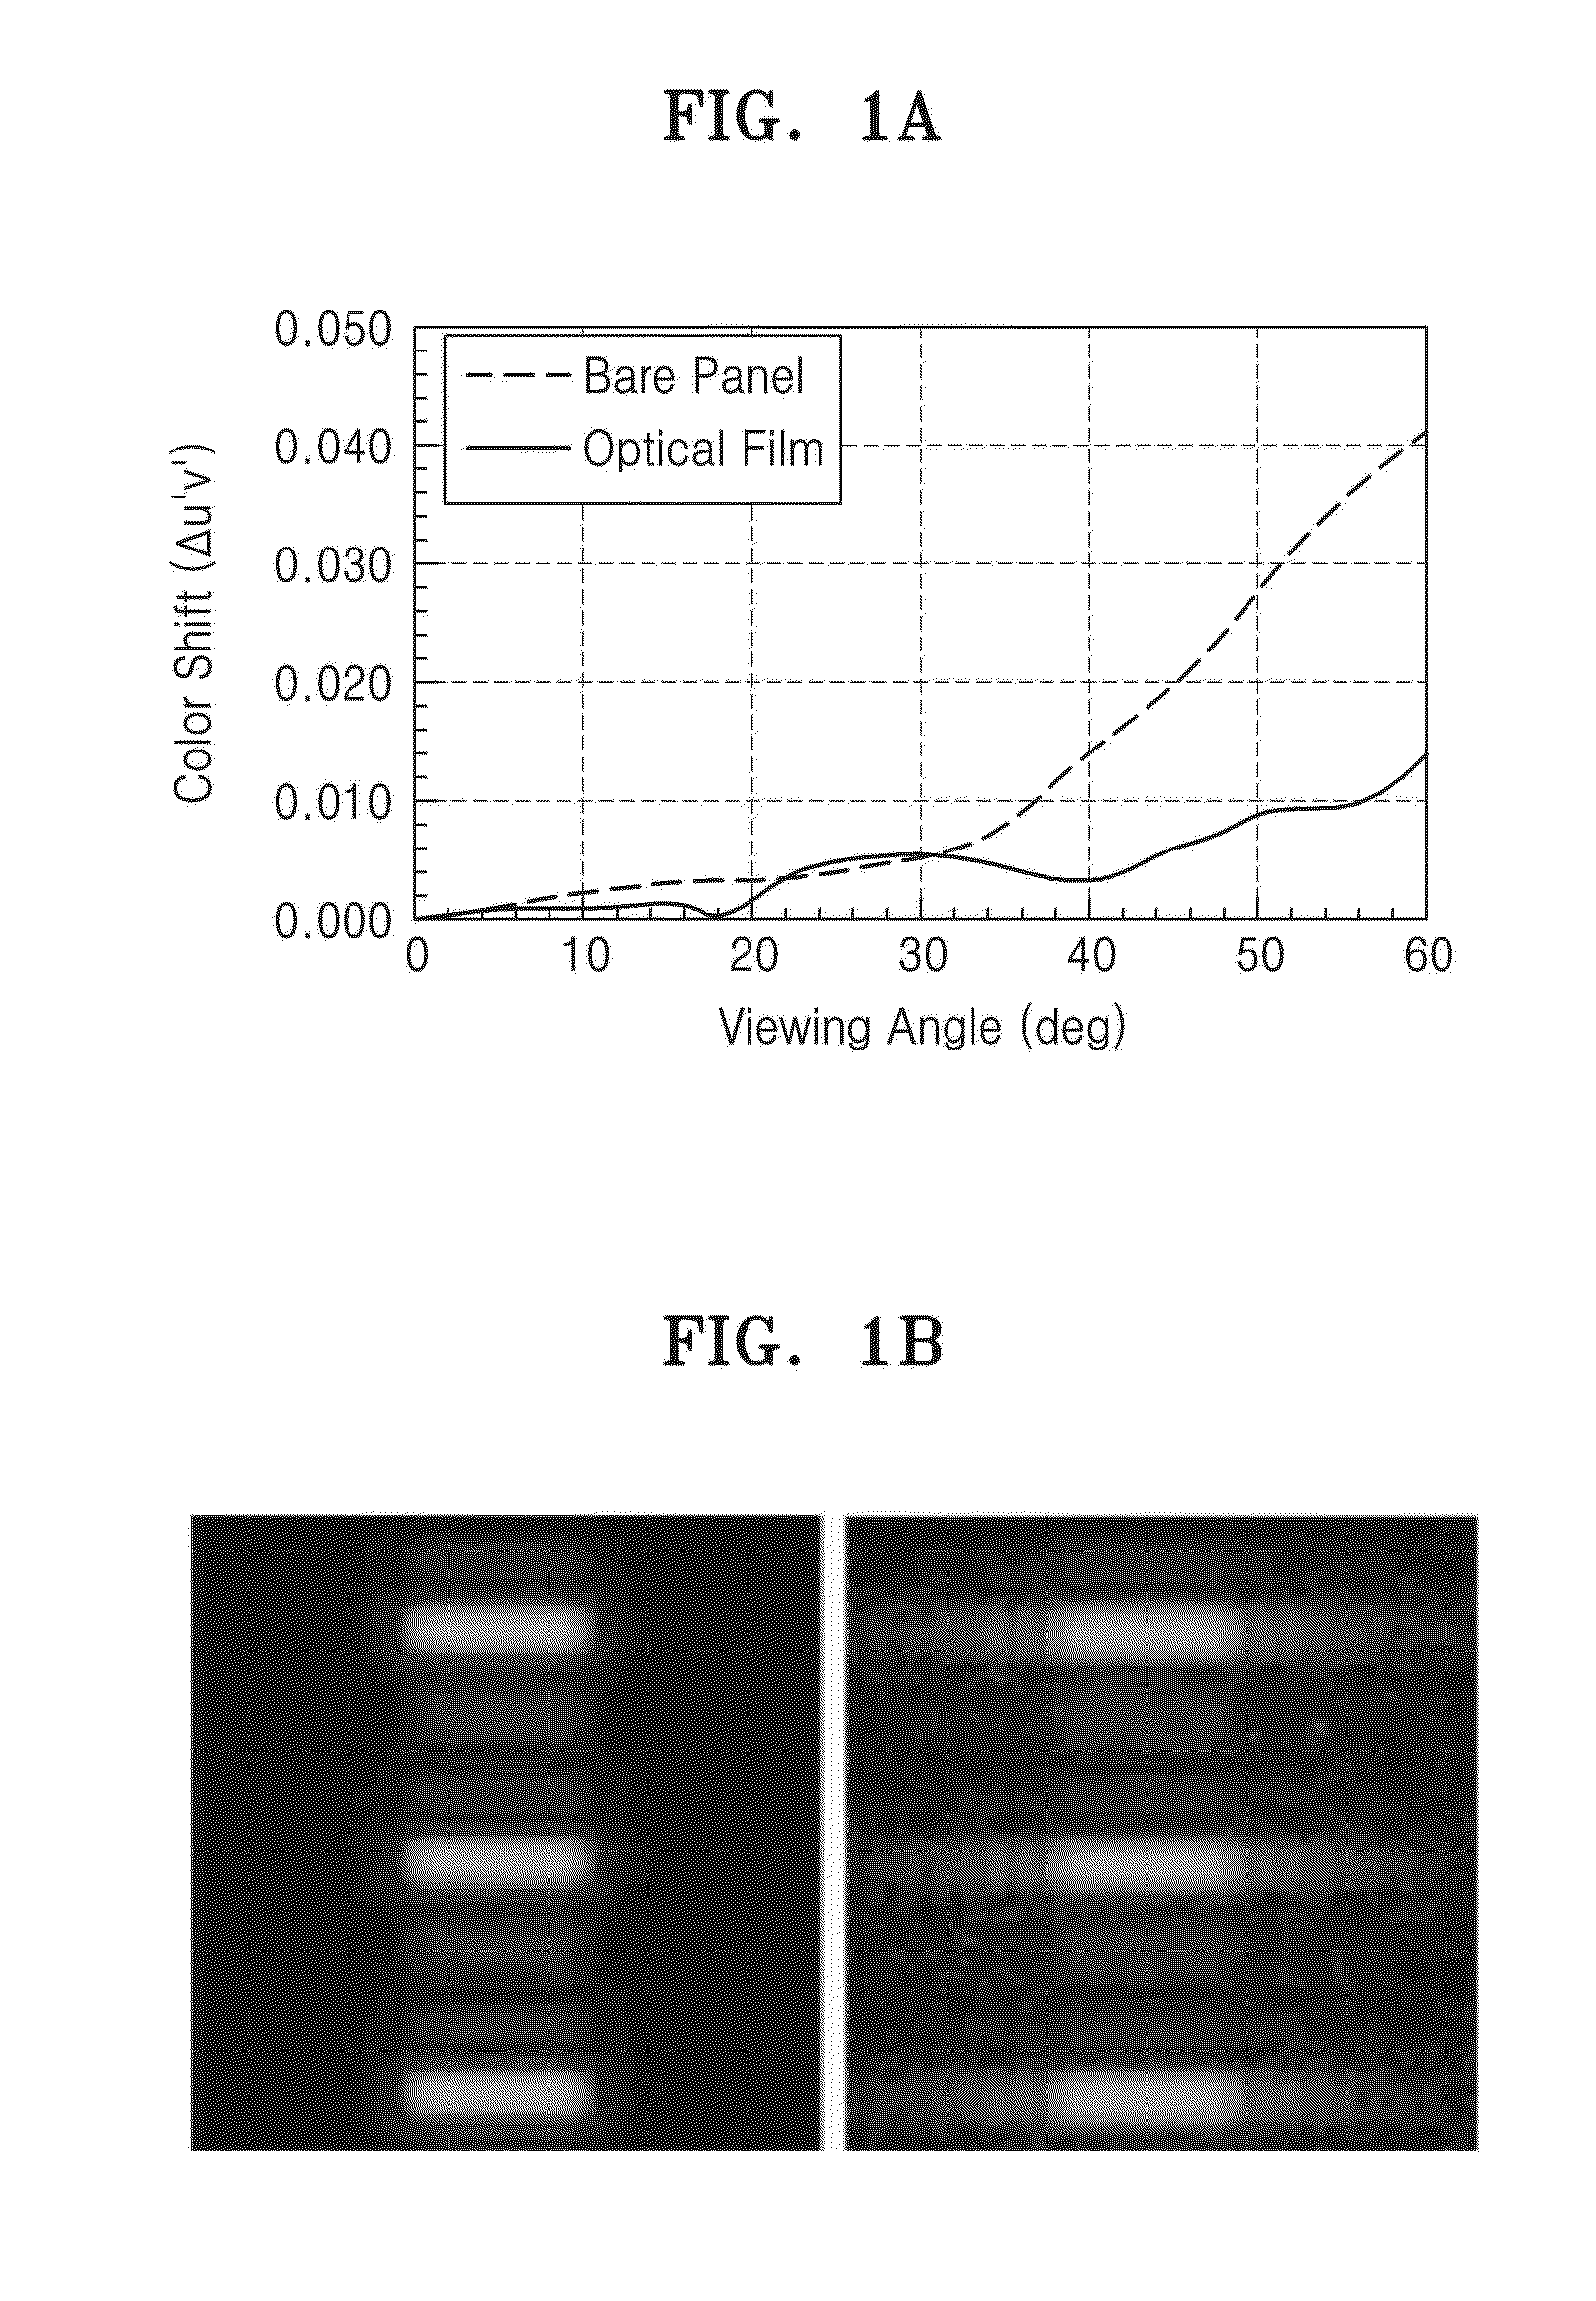 Method of evaluating image blur of optical film and optical film with reduced image blur